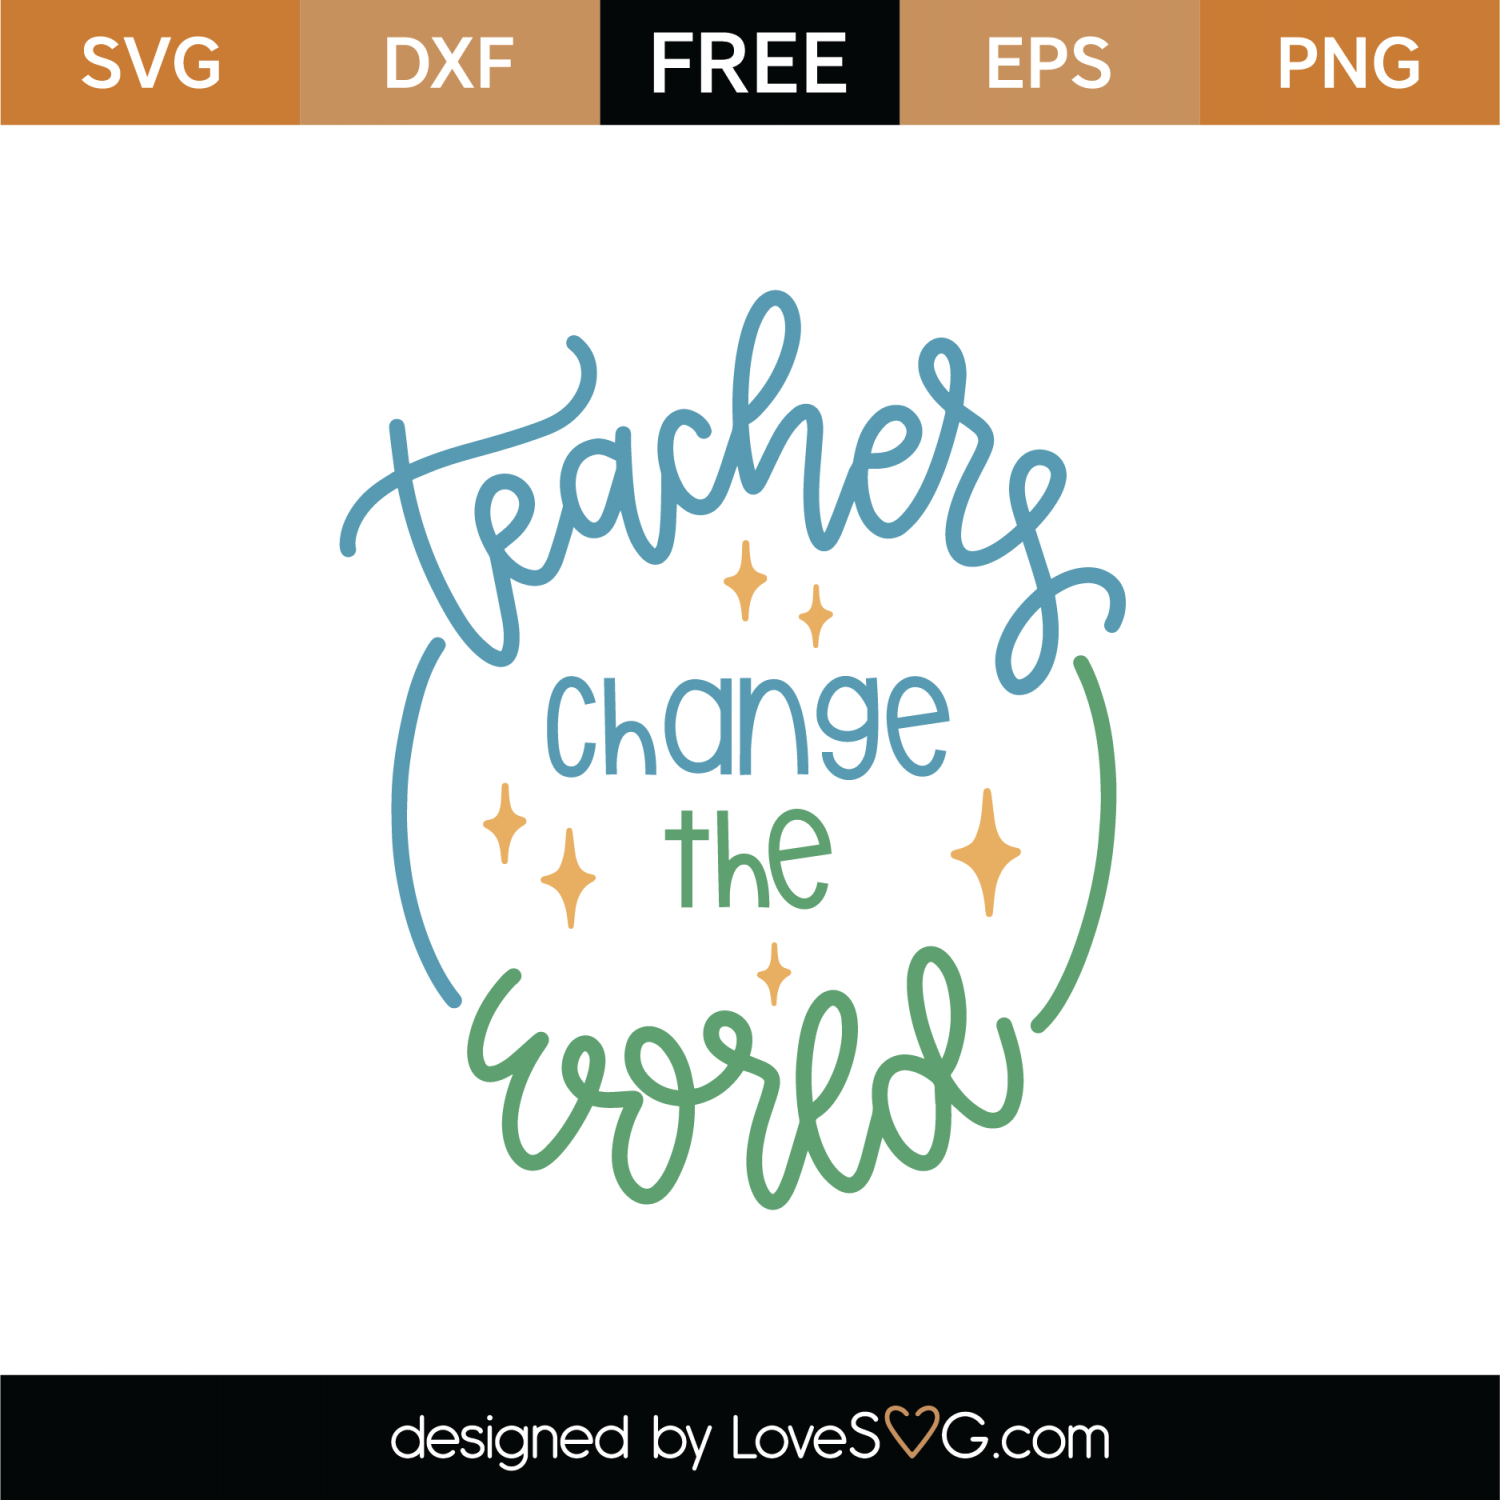 Download Free Teachers Change The World SVG Cut File | Lovesvg.com